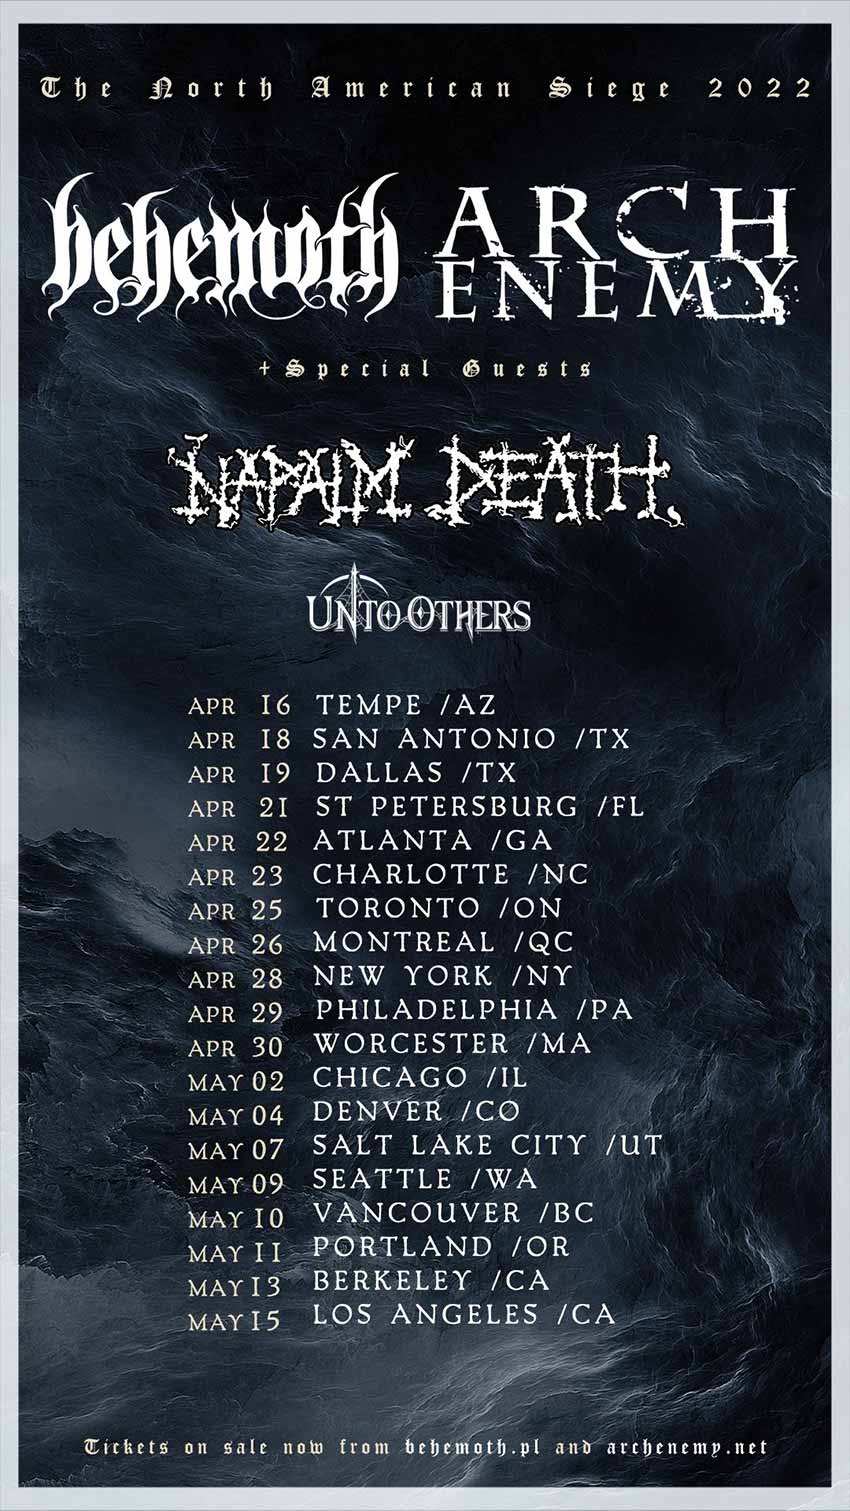 Behemoth Arch Eenemy Napalm Death Unto Others tour dates 2022